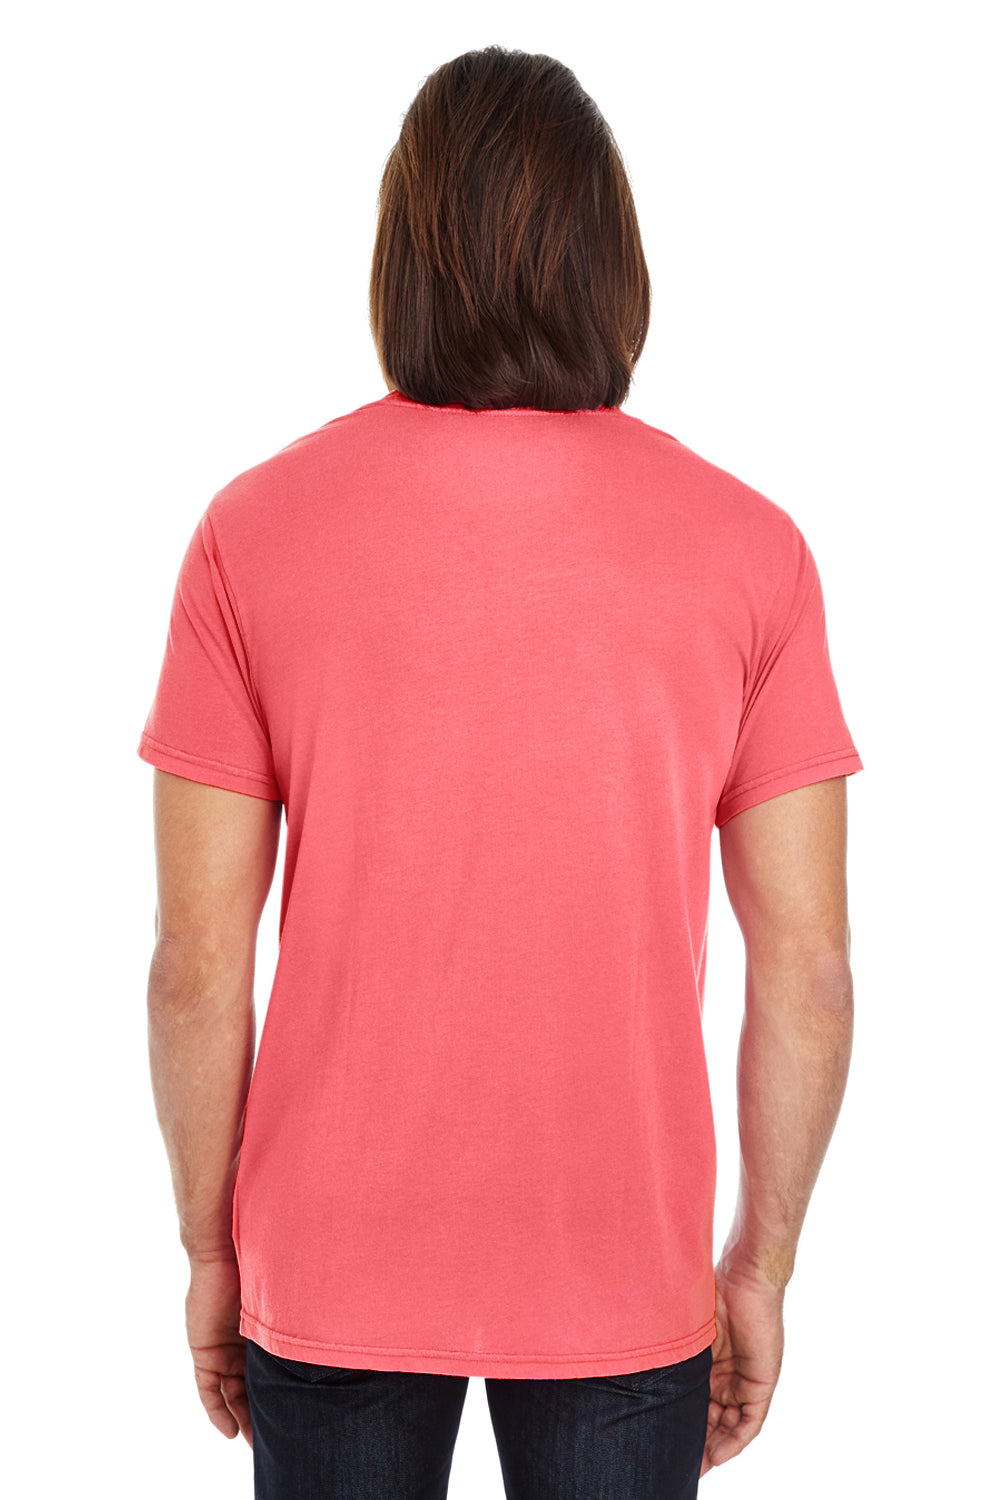 Threadfast Apparel 130A Mens Short Sleeve Crewneck T-Shirt Red Back